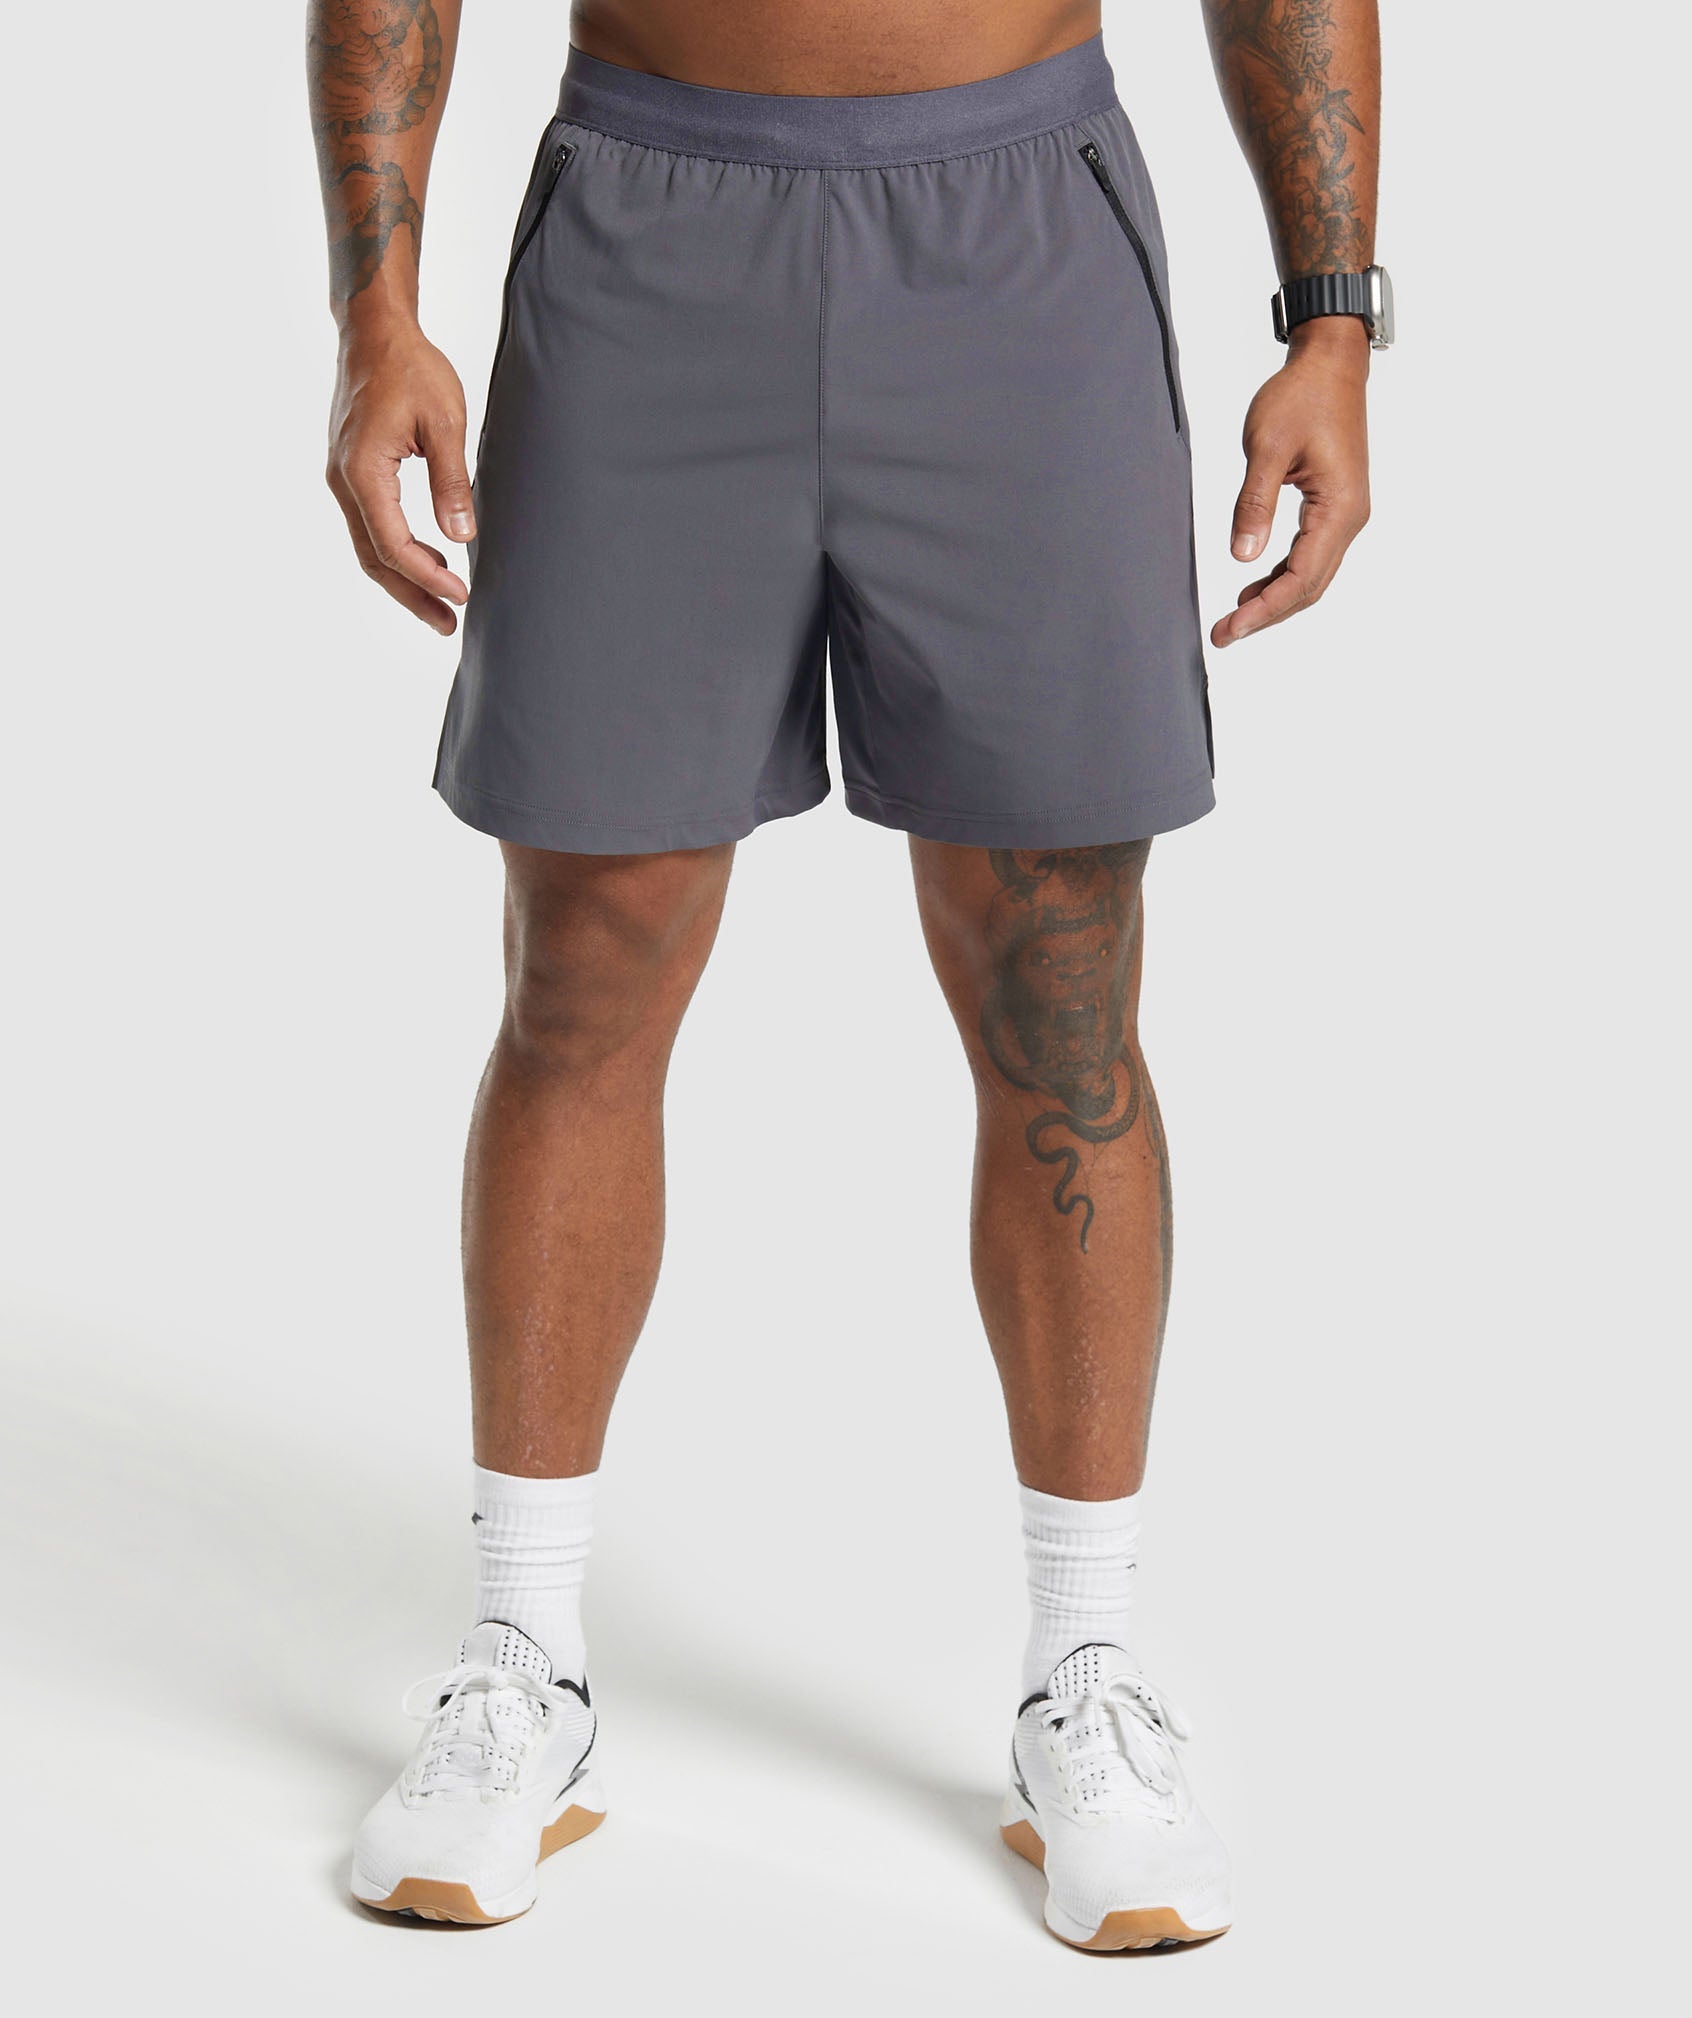 Apex 7" Hybrid Shorts in Dark Grey - view 1